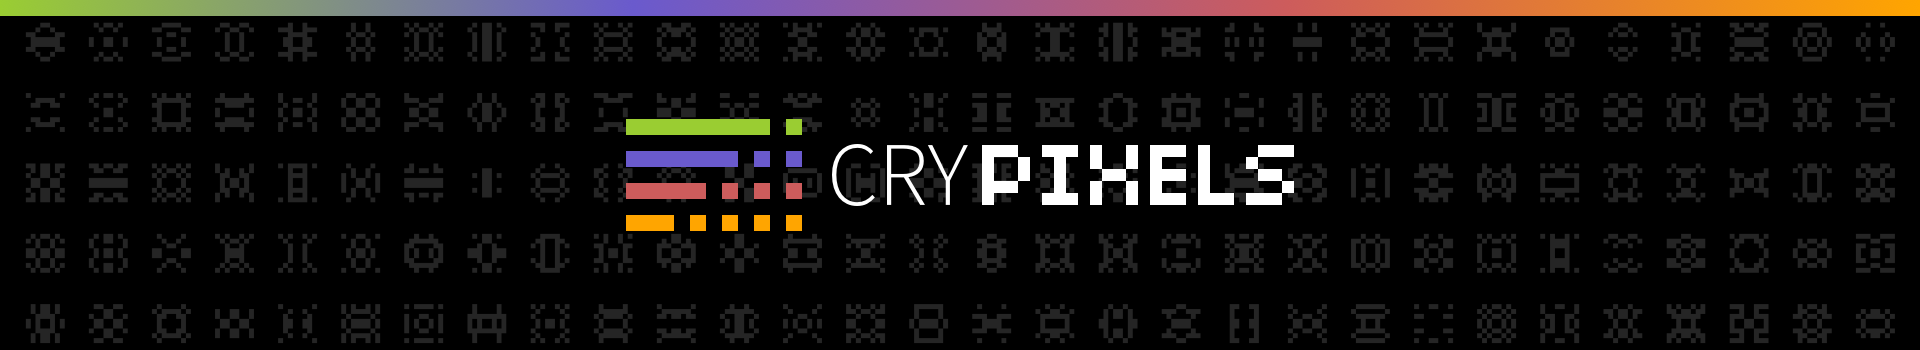 CryPixels